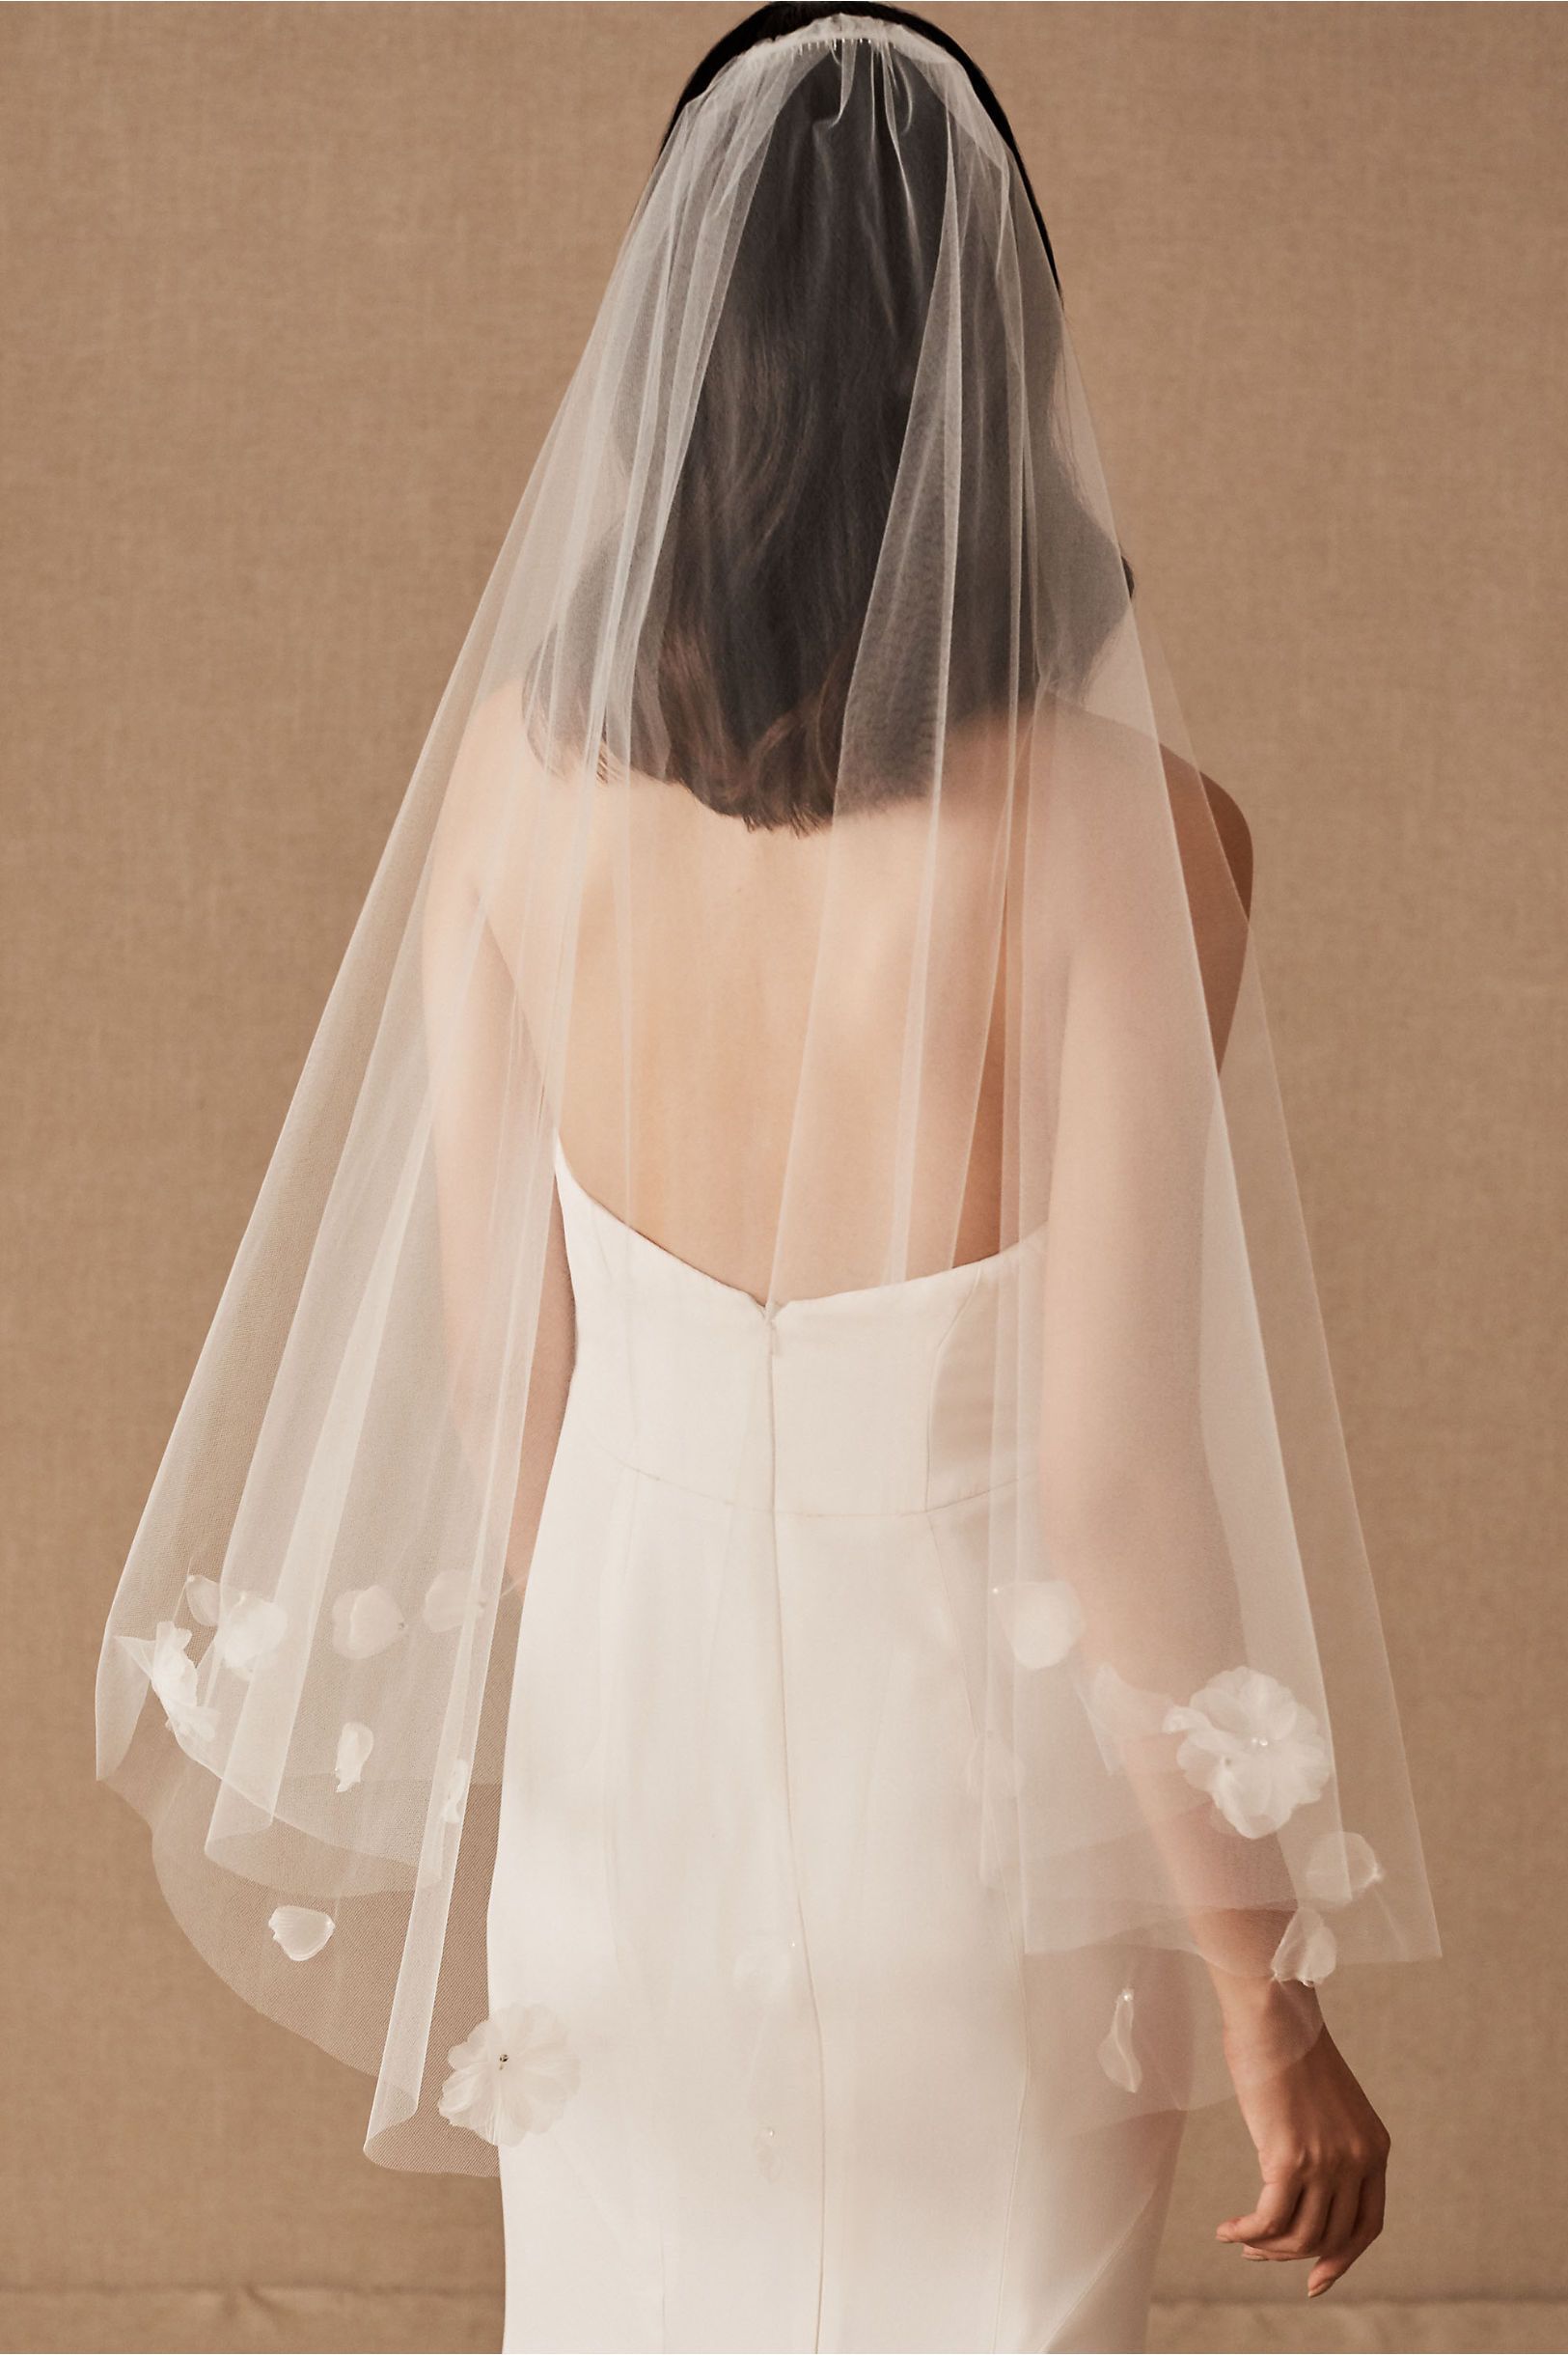 Langdon Fingertip Veil Wedding Dress With Veil Fingertip Veil Wedding Hair Updo With Veil